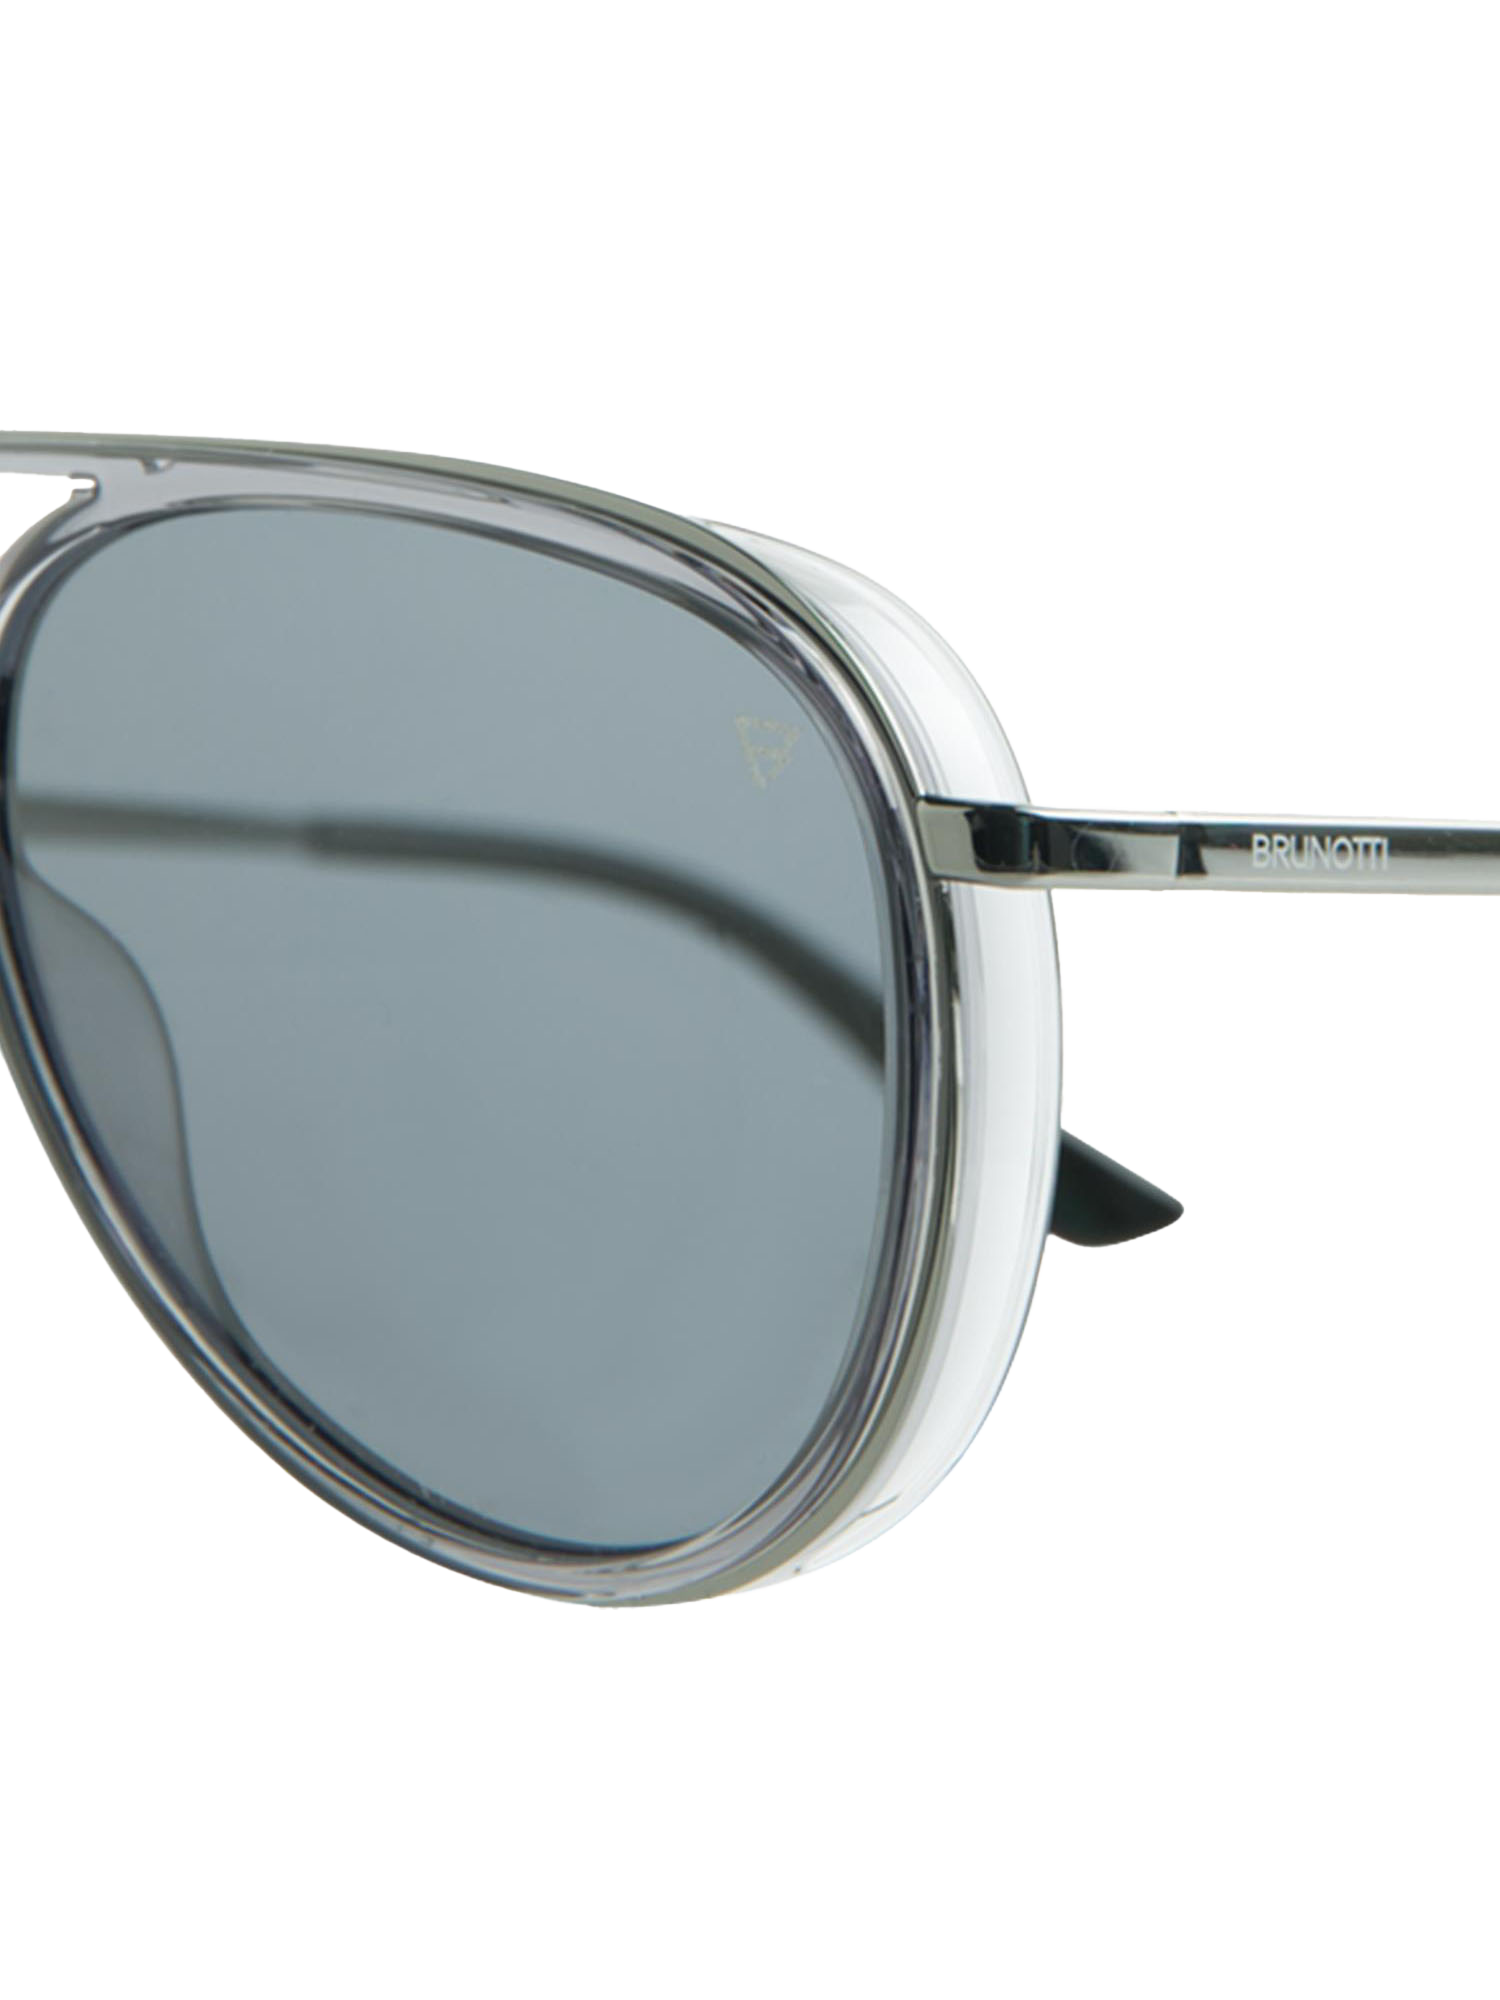 Peyto 2 Unisex Sunglasses | Silver